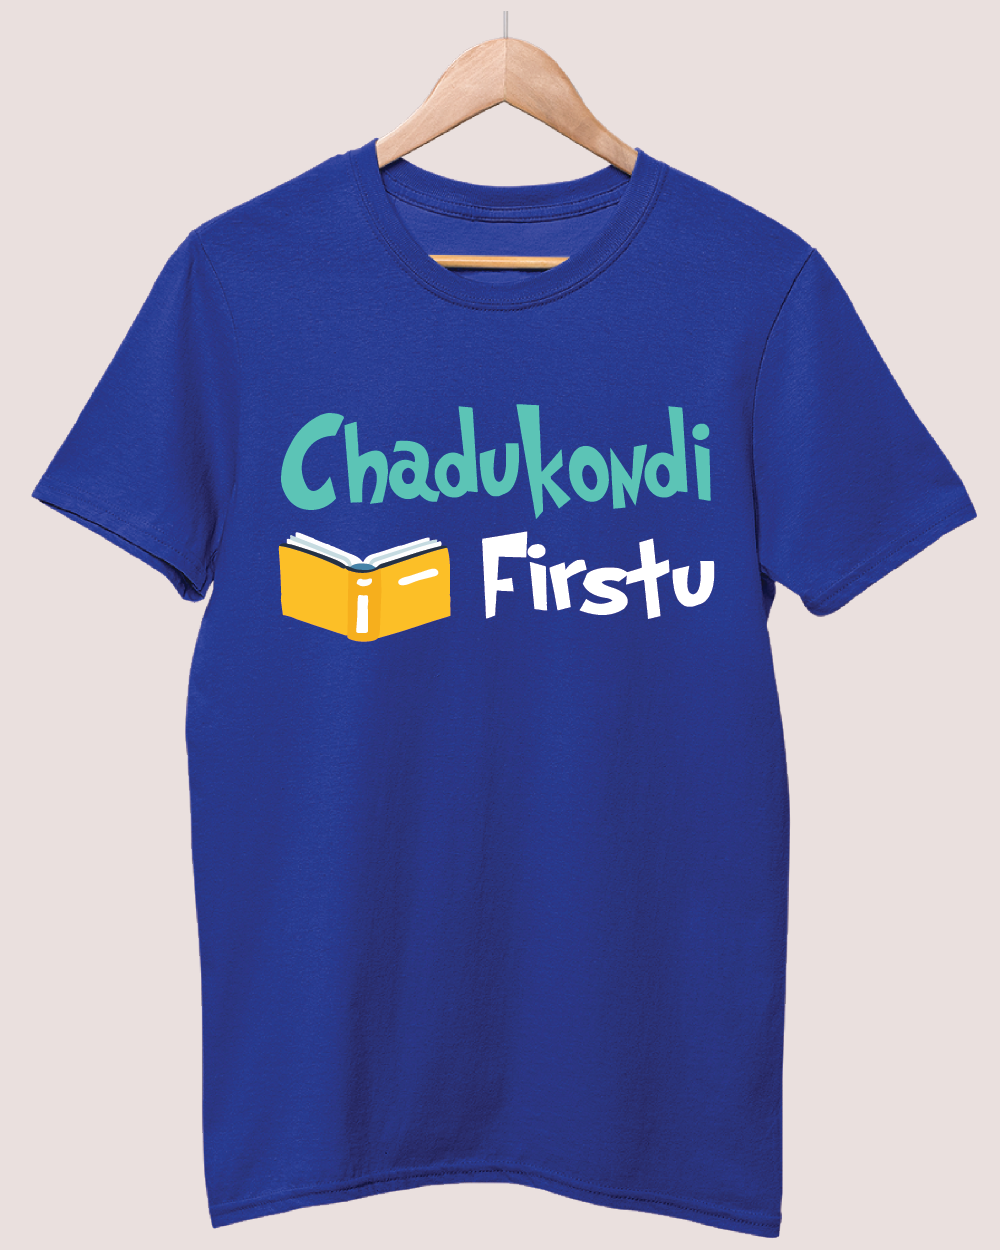 Chadukondi Firstu T-shirt